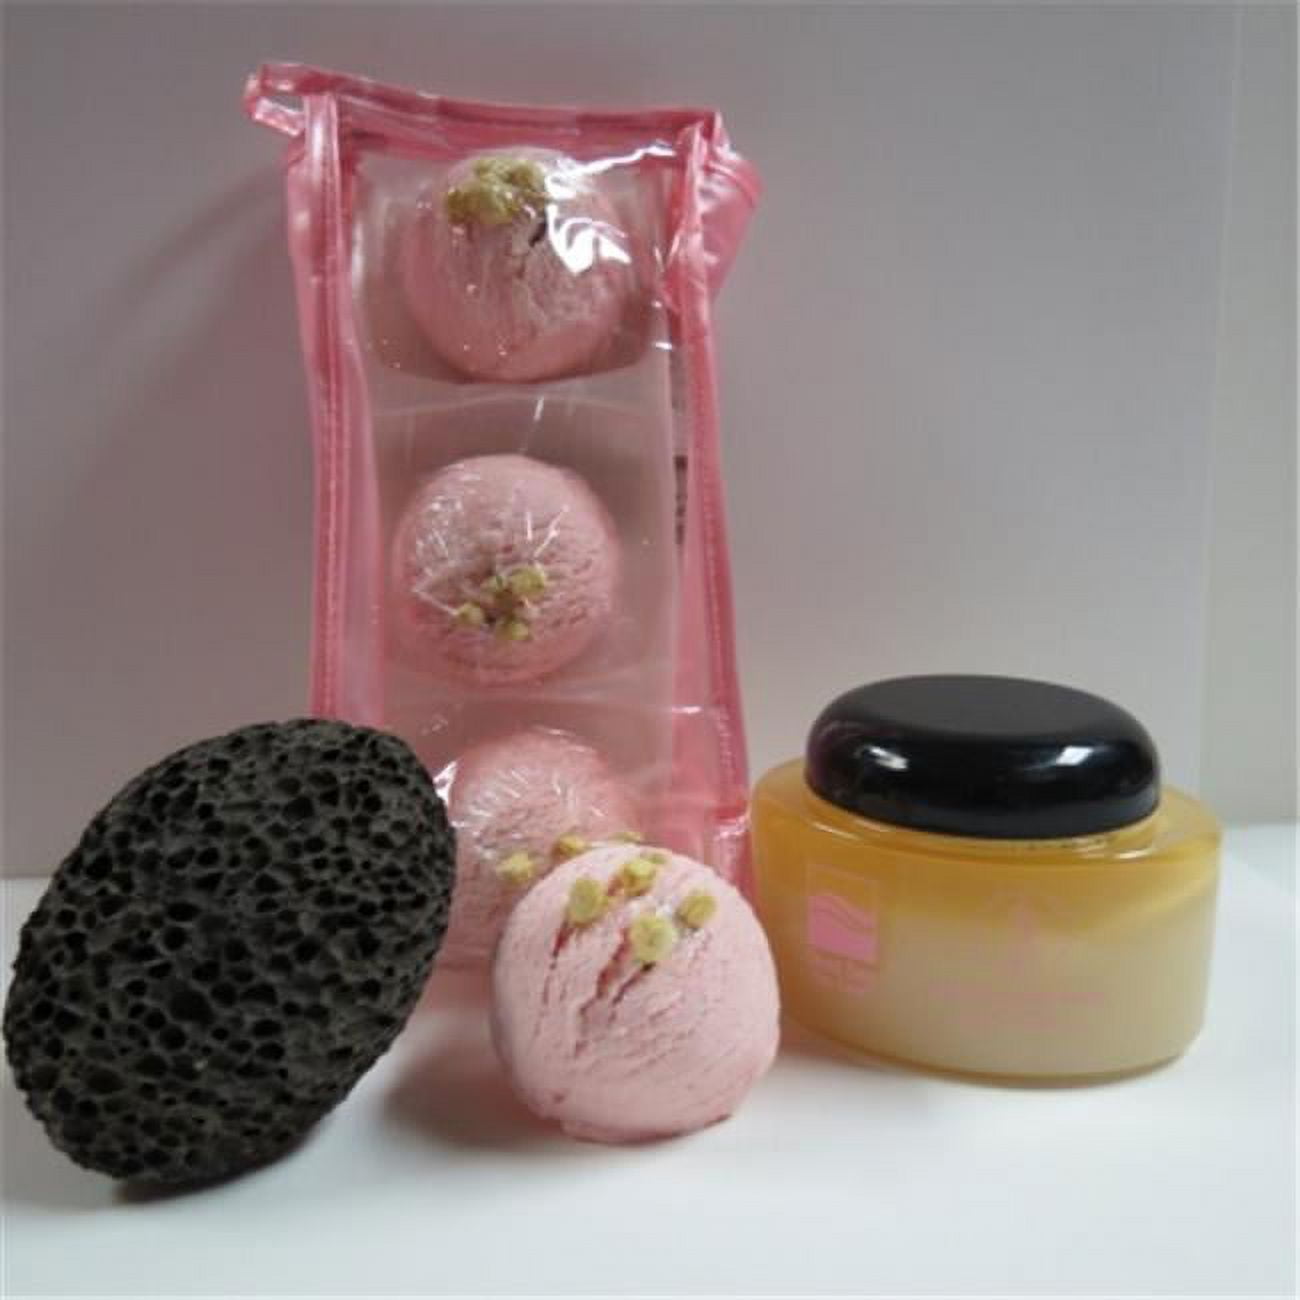 Deadsea-bbtal05 3 Pack Cherry Almond Bubble Bath Truffles, 10 Oz Almond Dry Salt Scrub & Pumice Stone